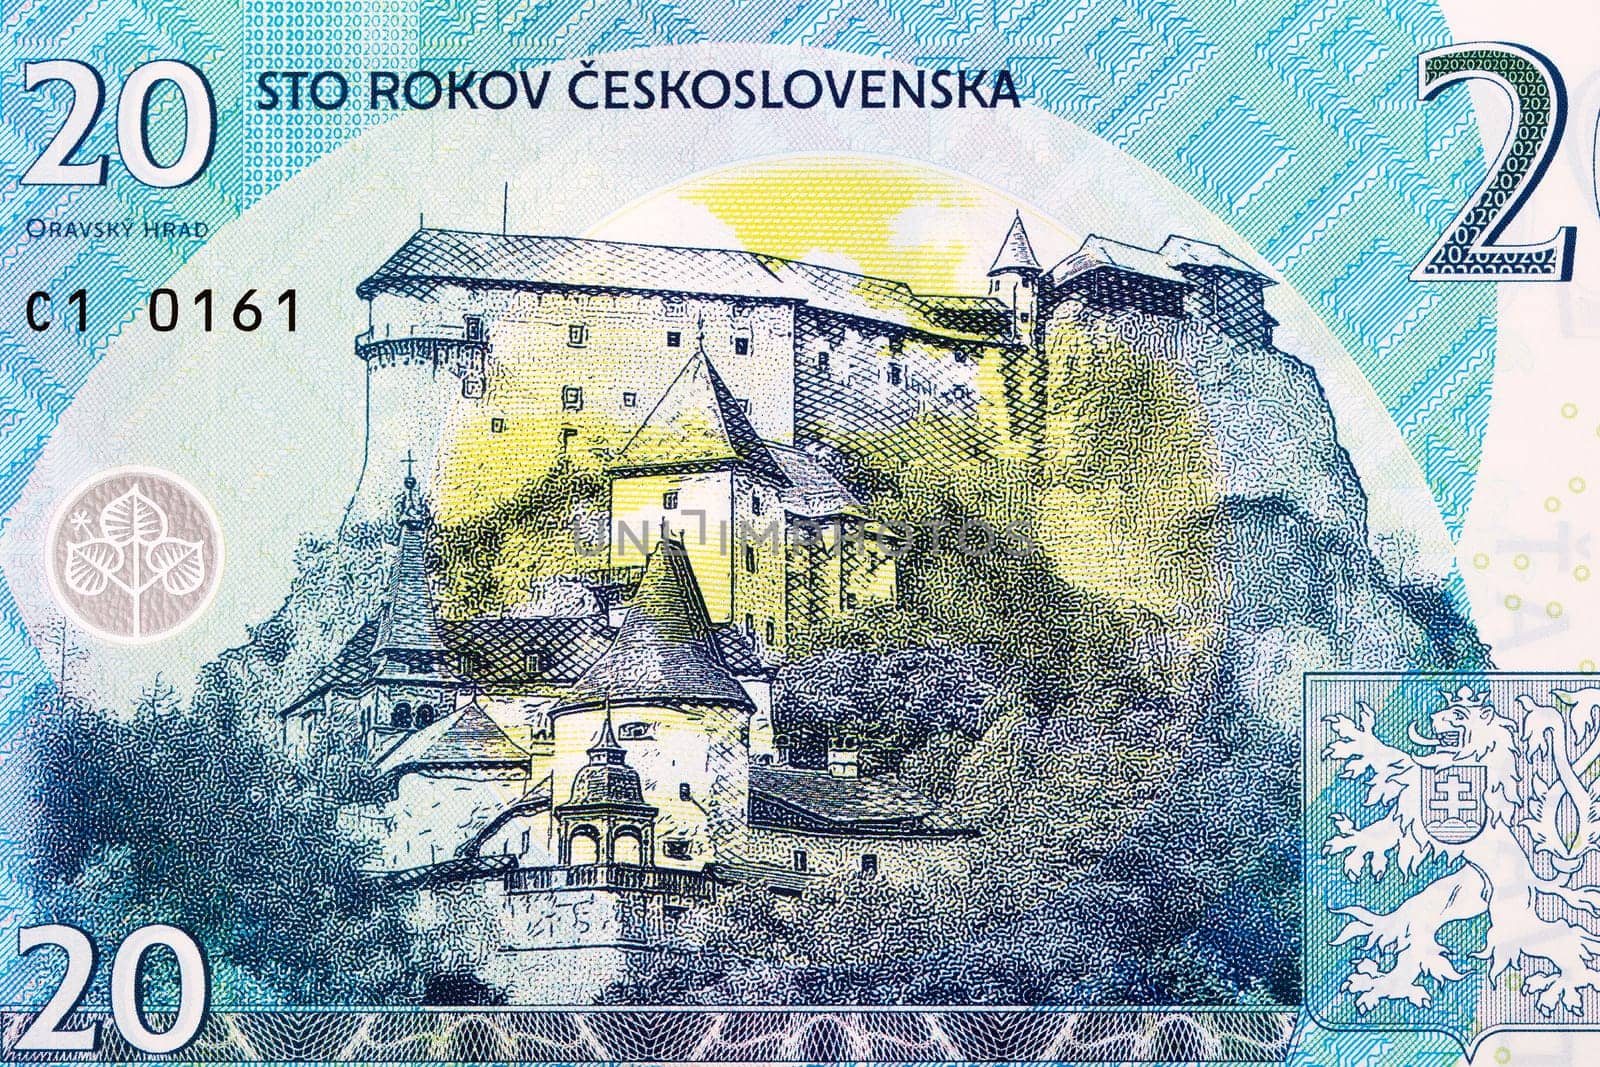 Orava Castle on the hill from Czechoslovak money